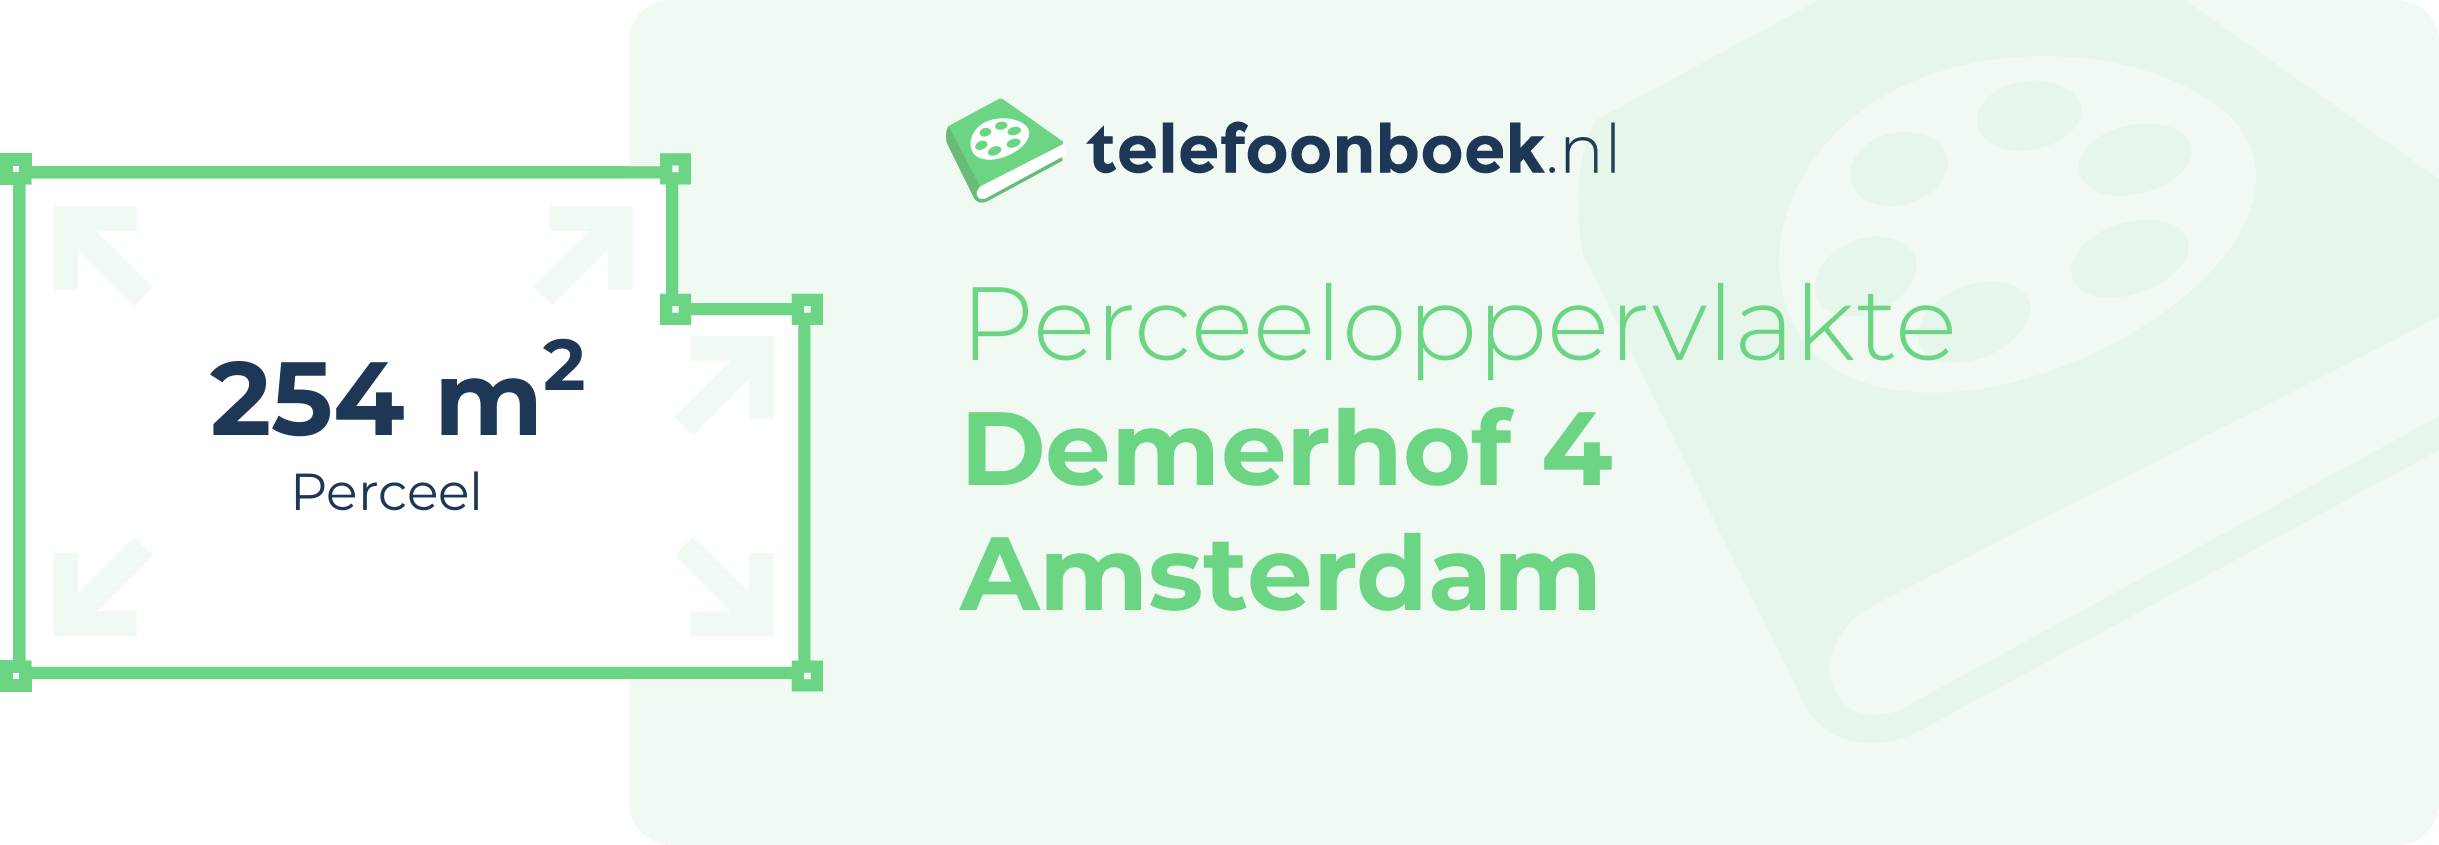 Perceeloppervlakte Demerhof 4 Amsterdam